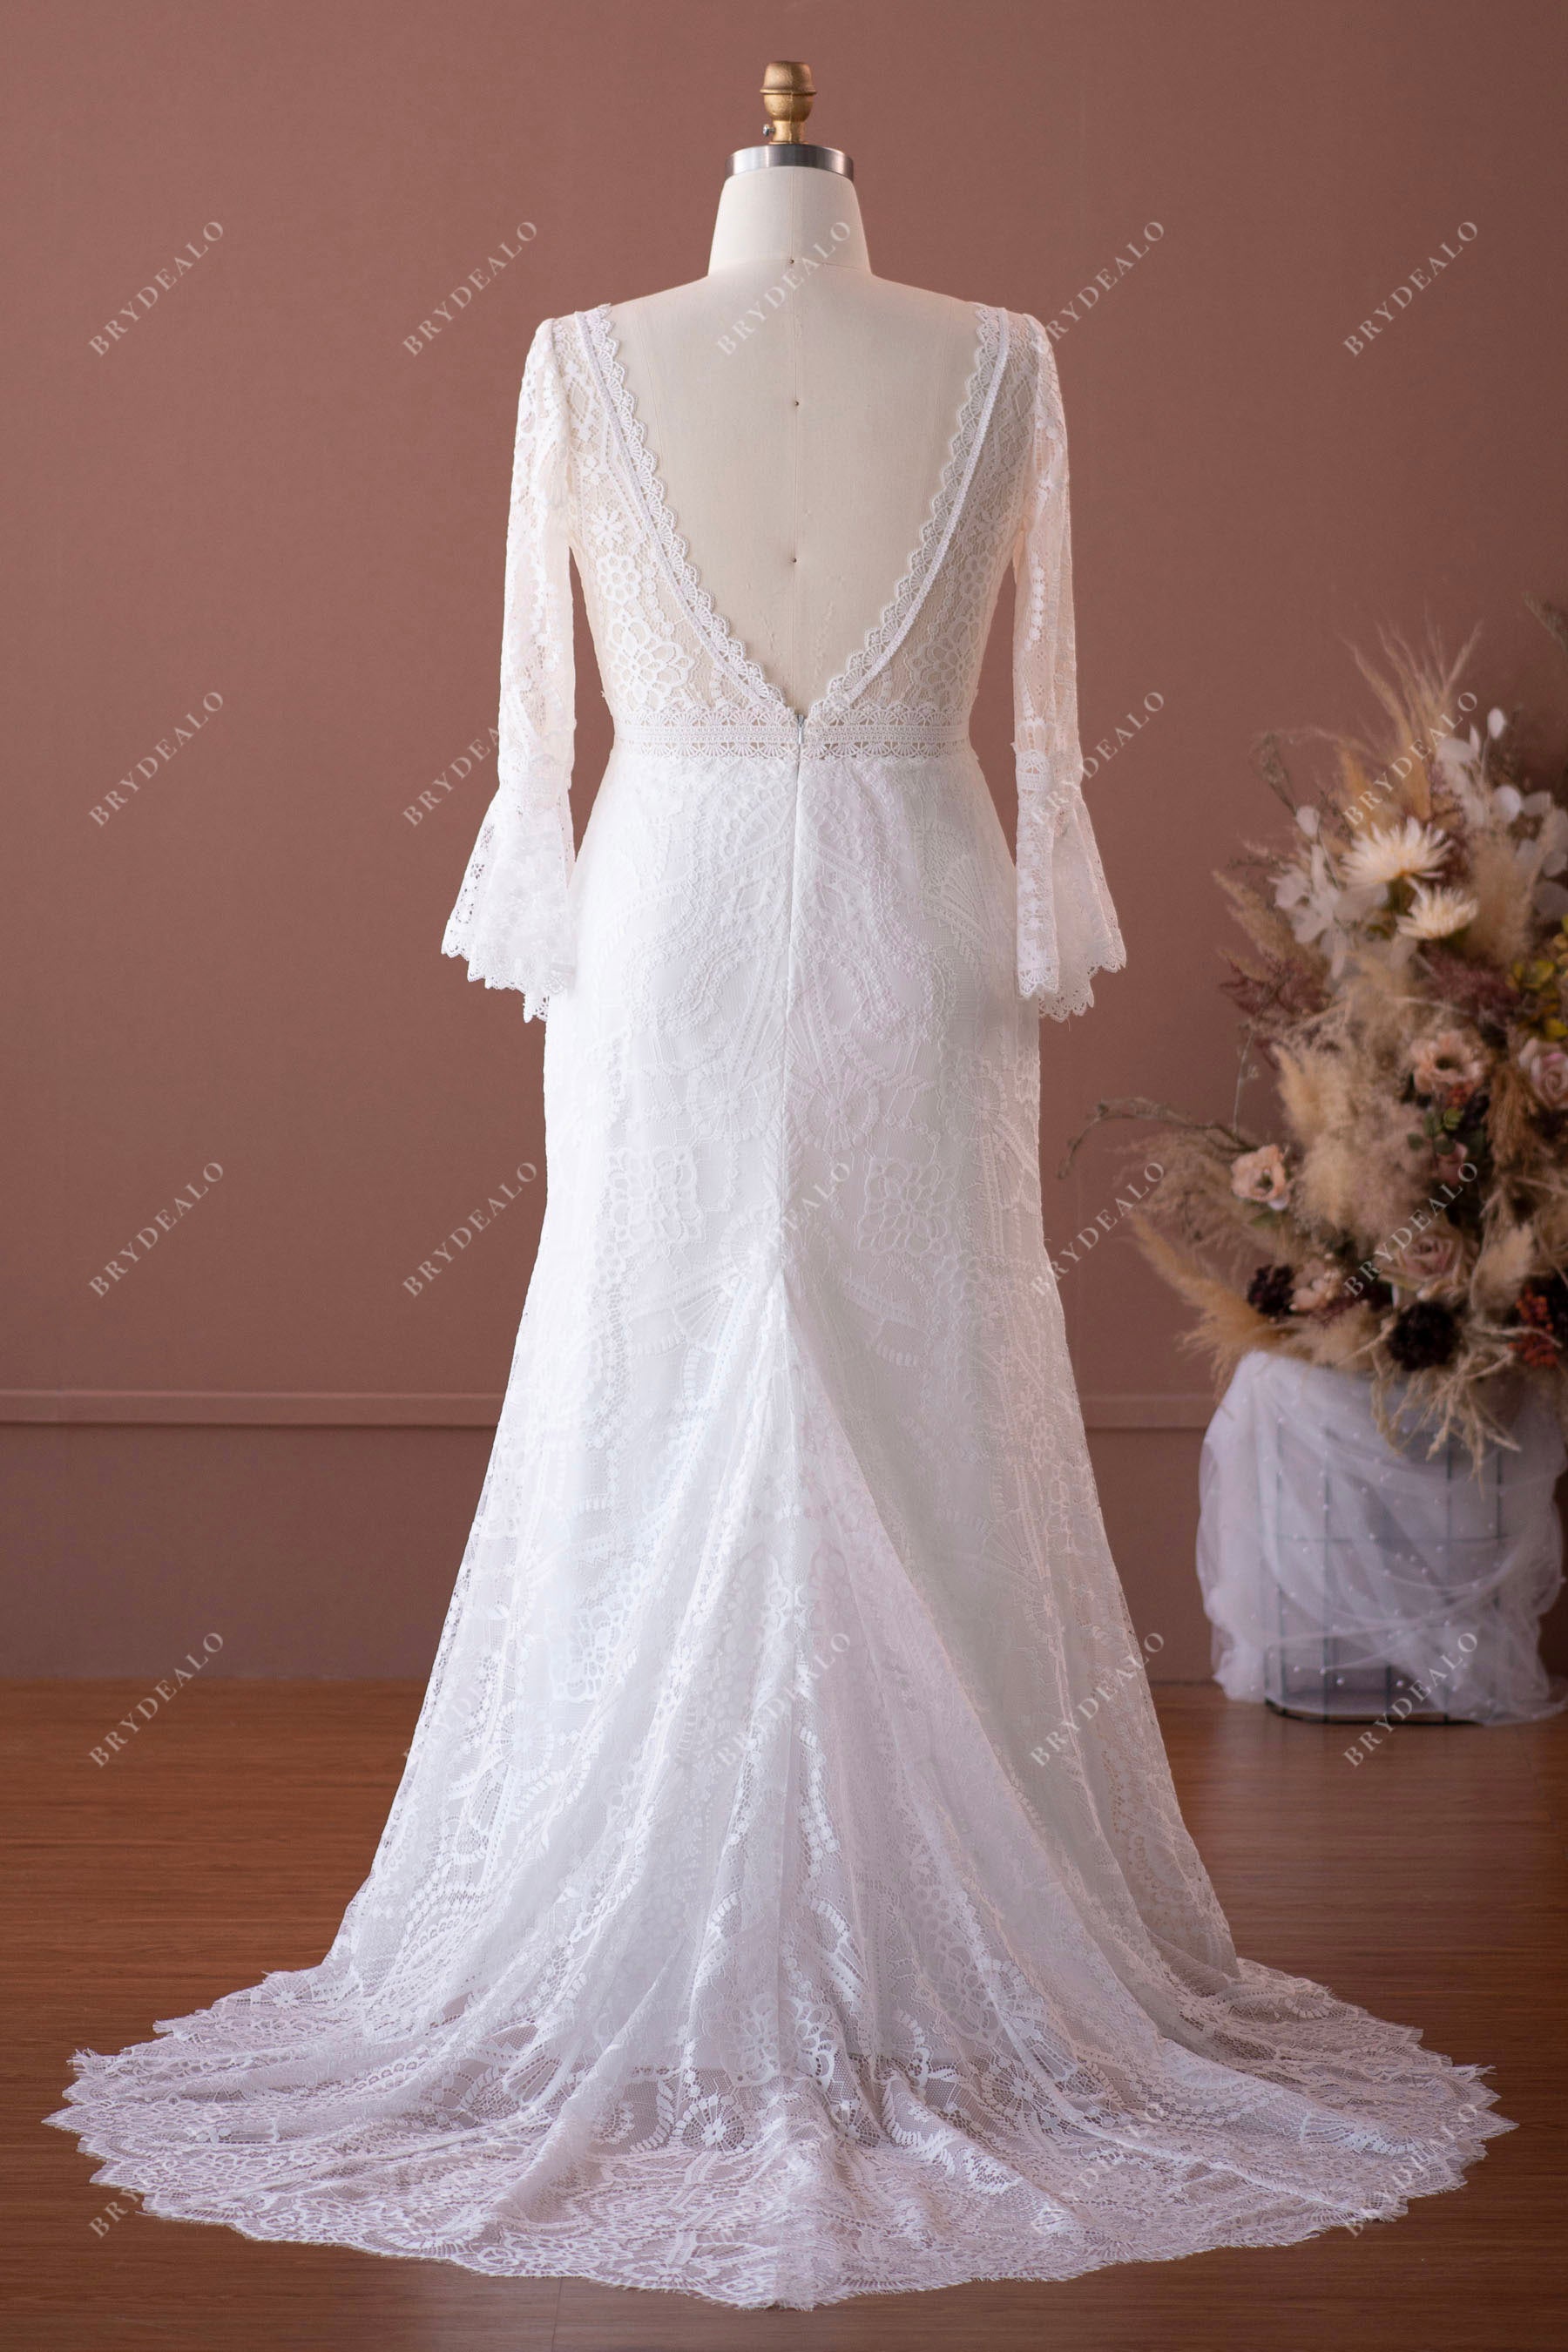 V-neck long wedding dress